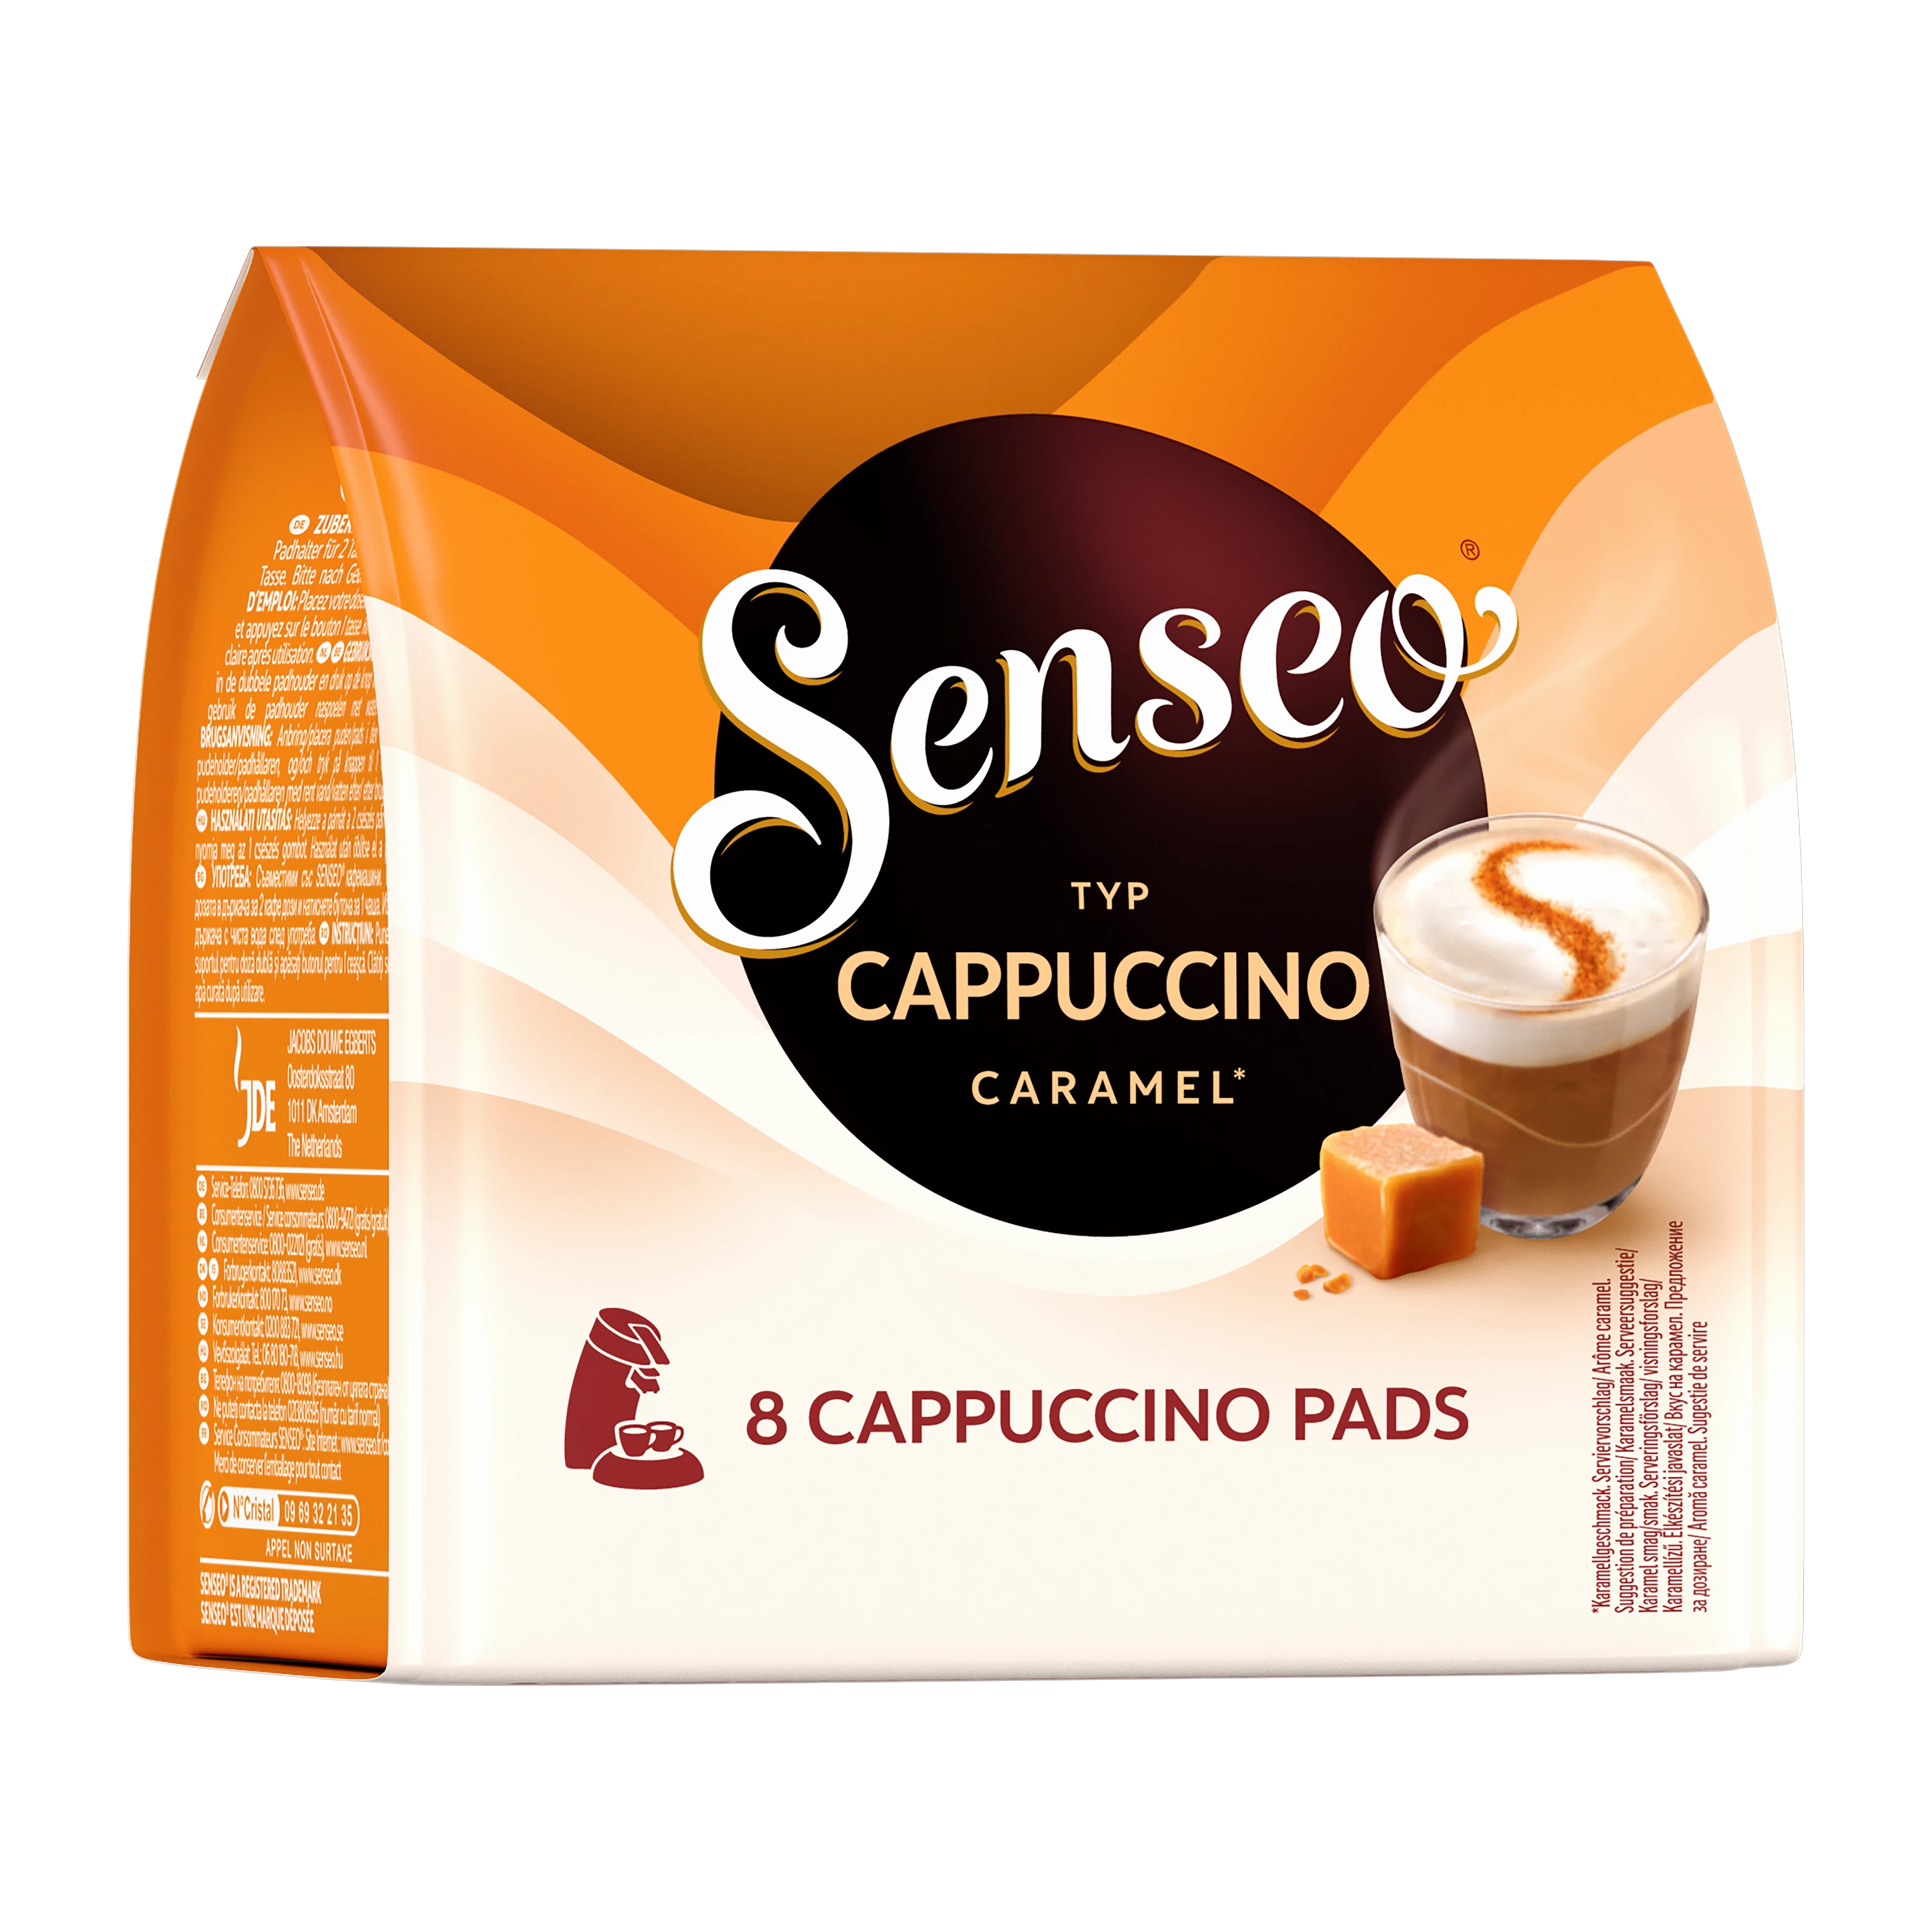 Verpakking van Senseo Cappuccino Caramel cappuccino pads.
